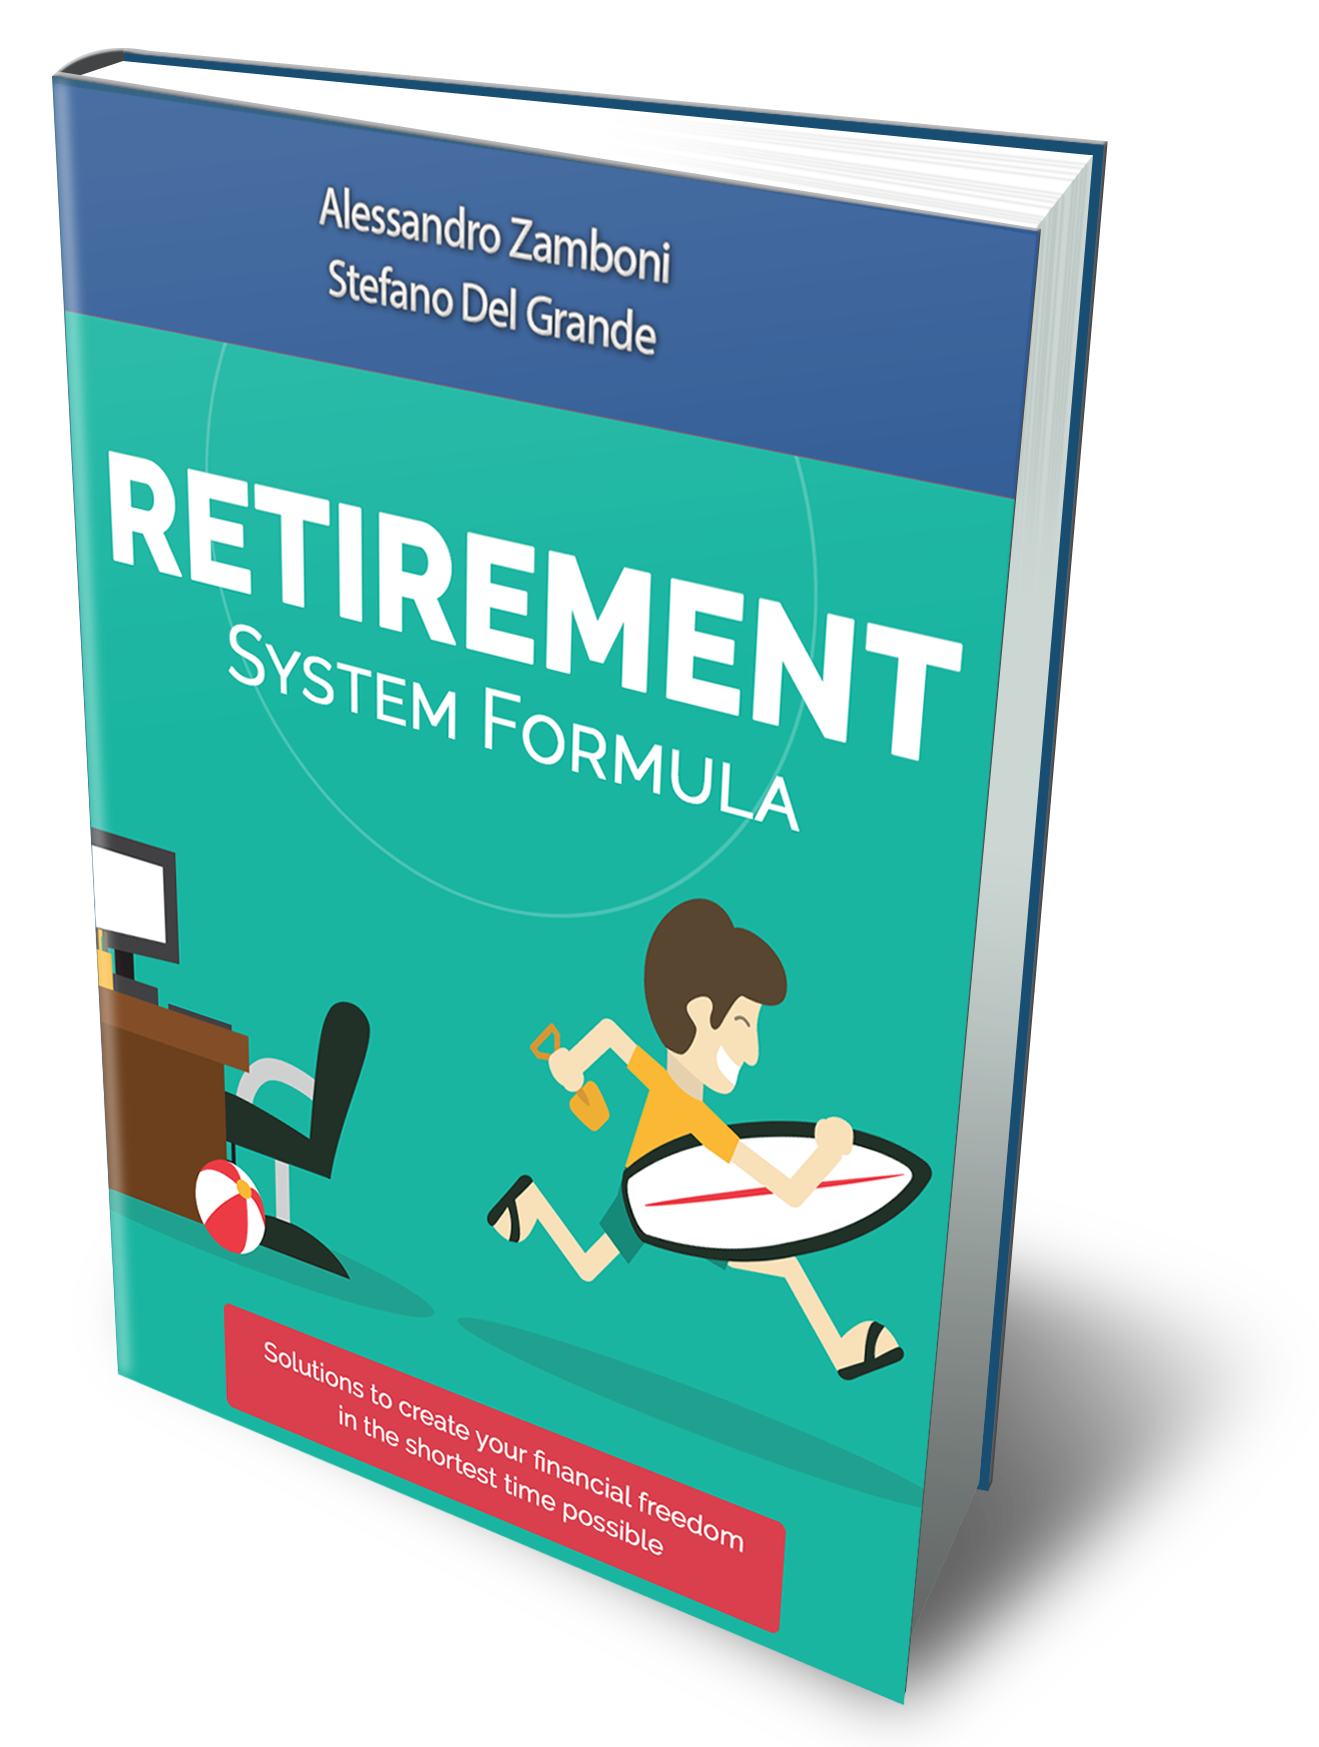 Retirement System Formula reviews